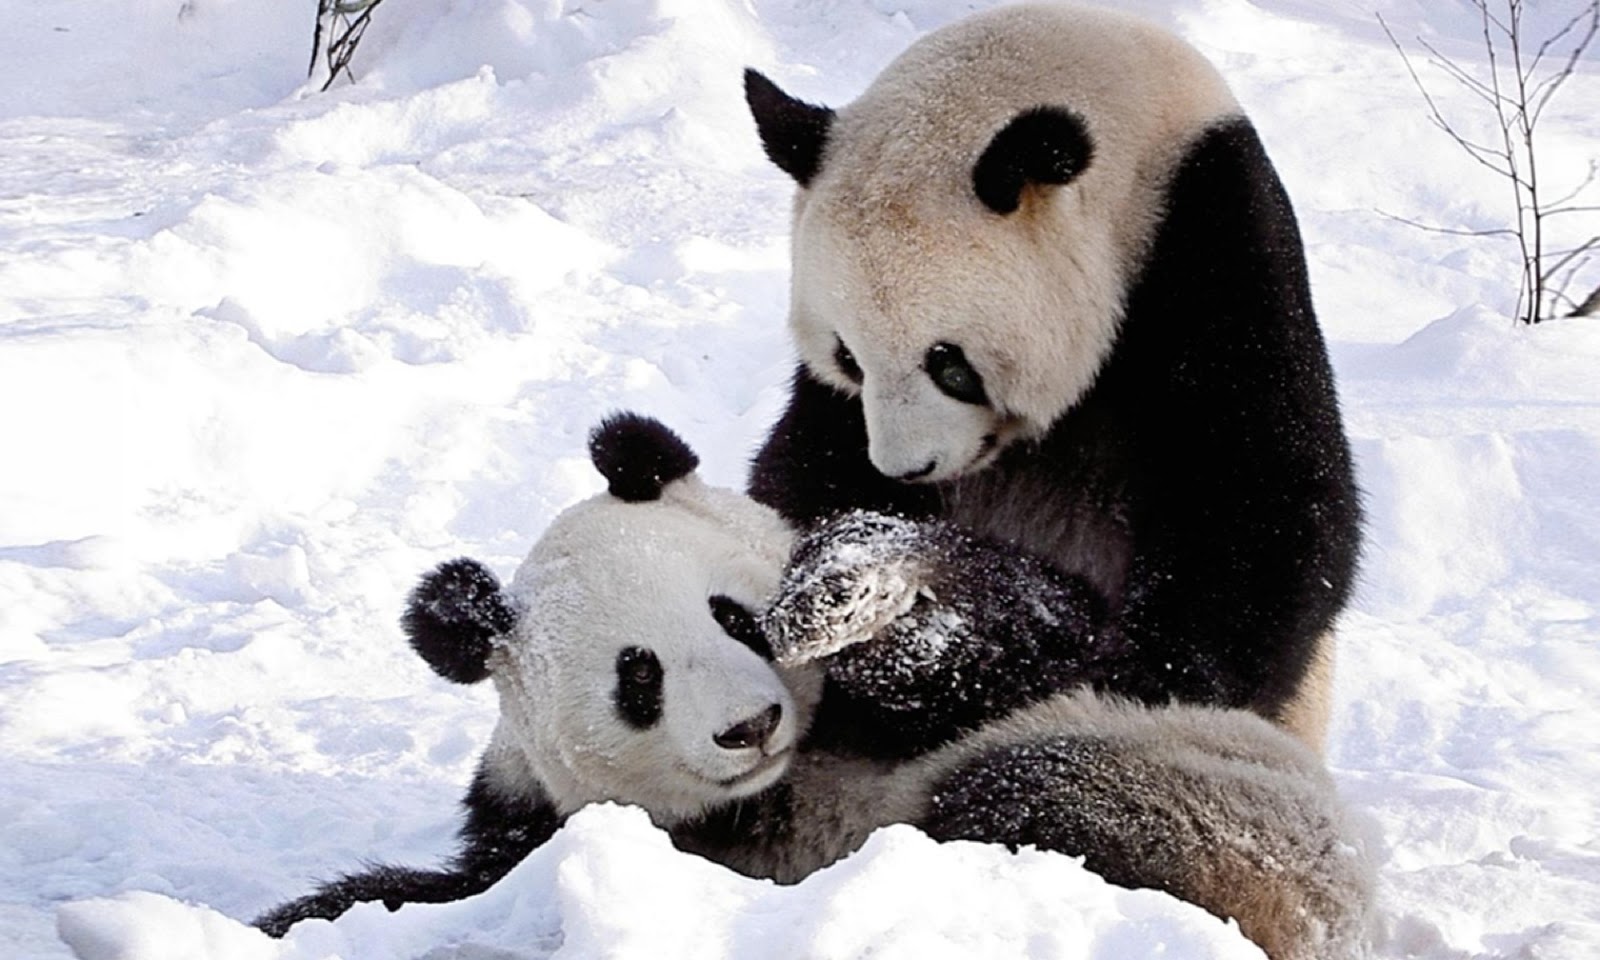  Cute  Panda Bears  HD Wallpapers  HD Wallpapers  Backgrounds  